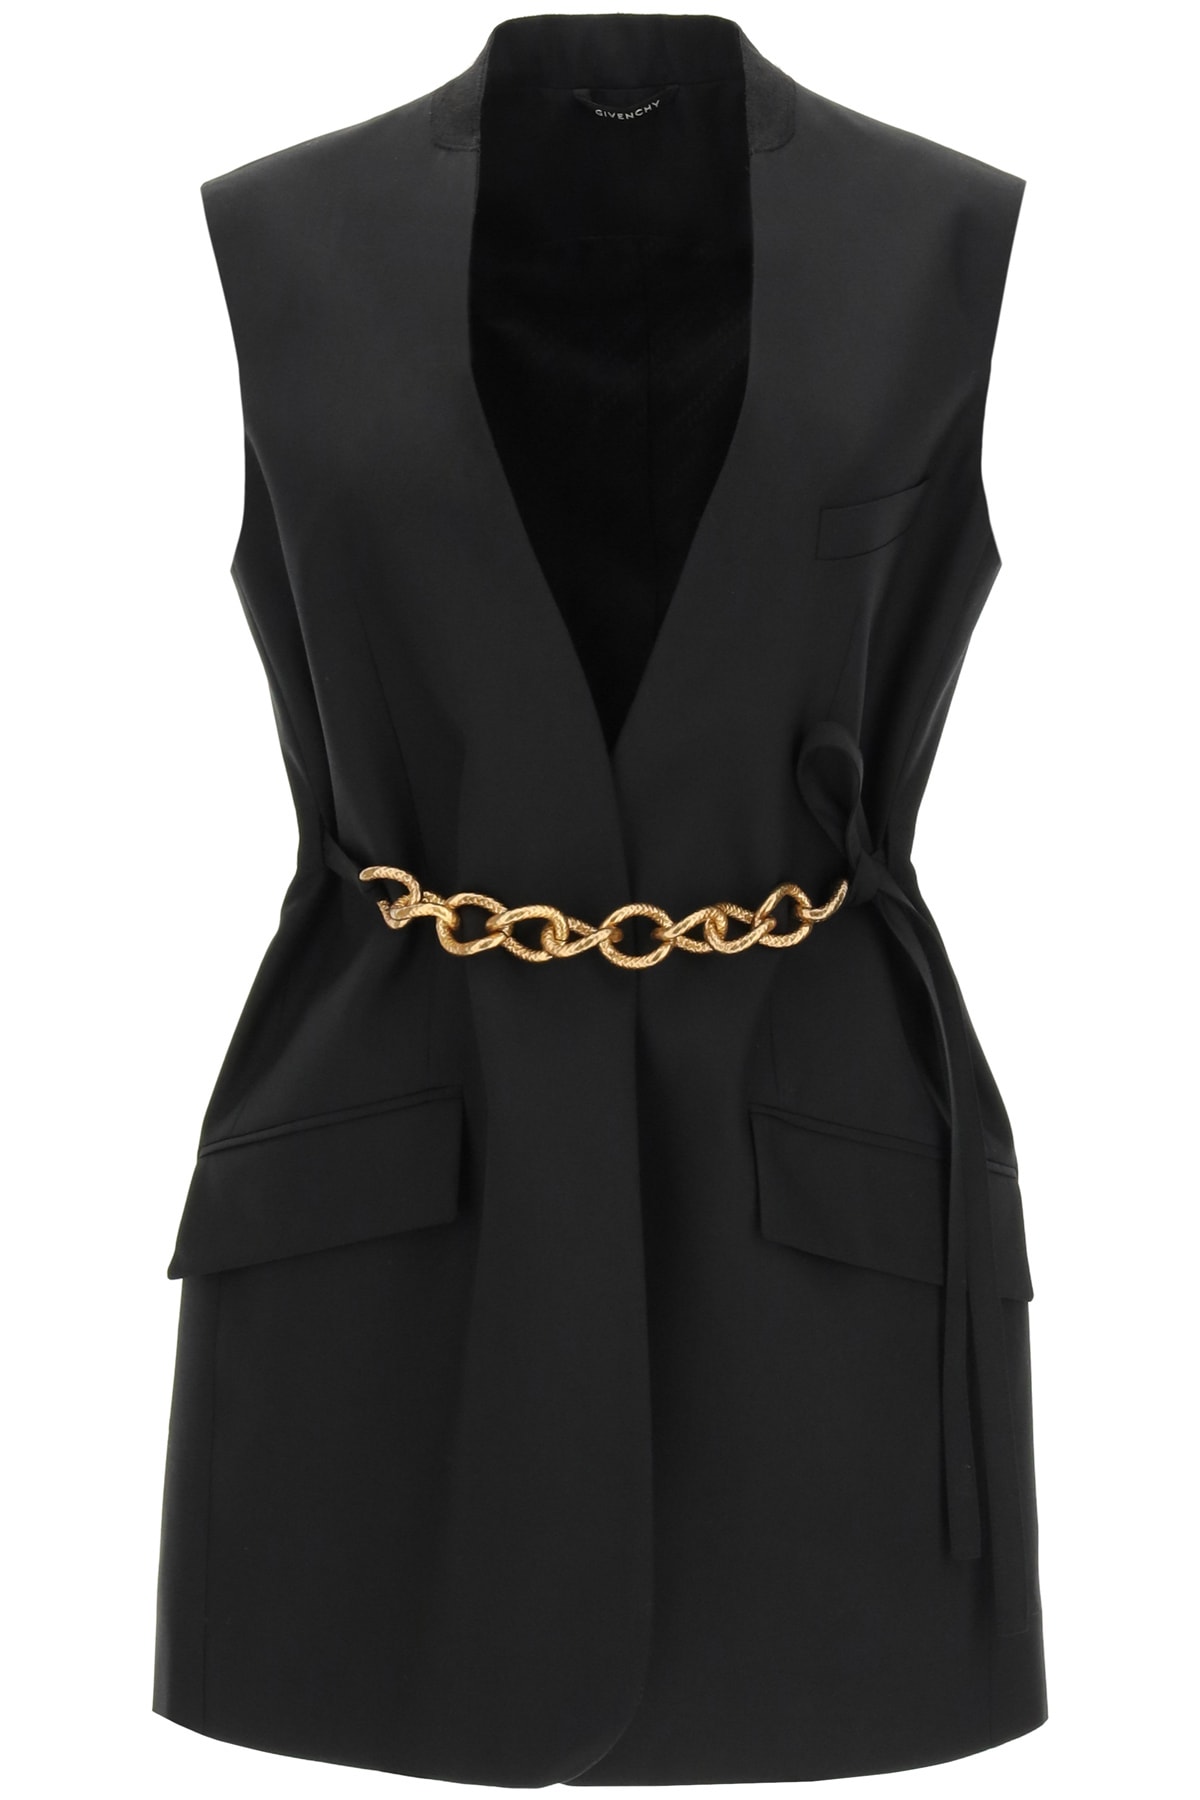 Givenchy Sleeveless Jacket With Chain